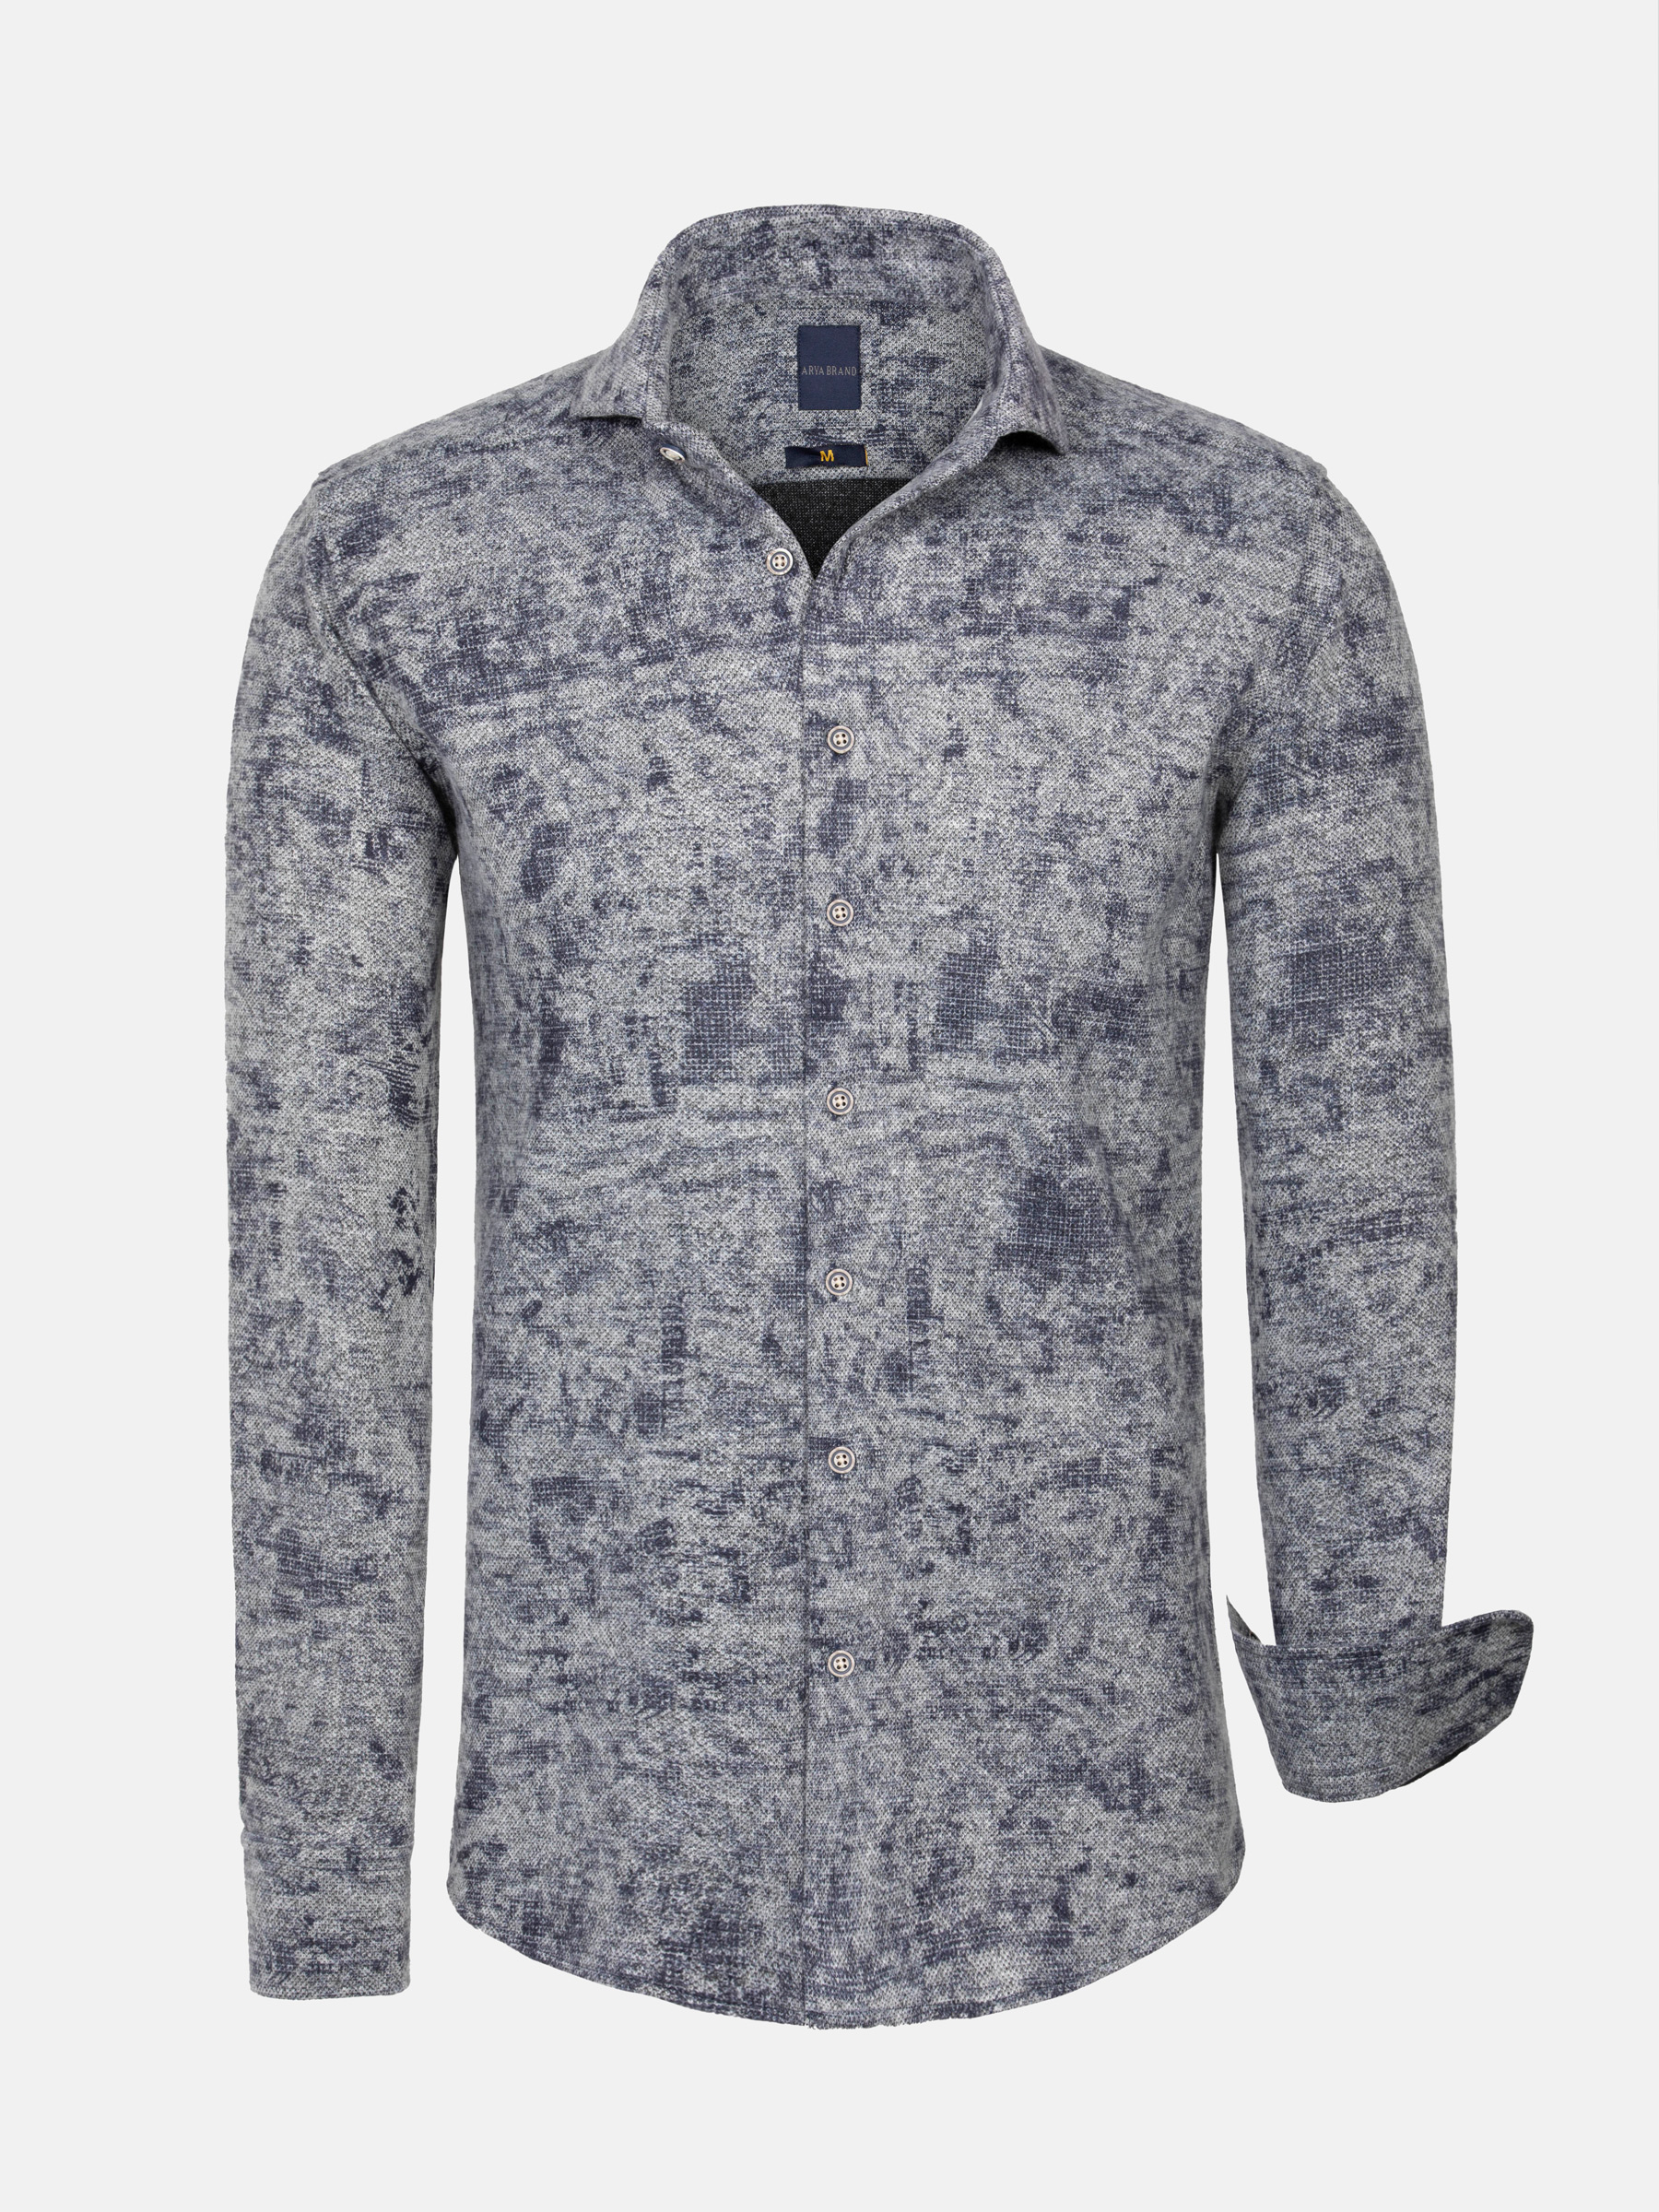 WAM Denim Overhemd Lange Mouw  Pinhel Navy Grey-